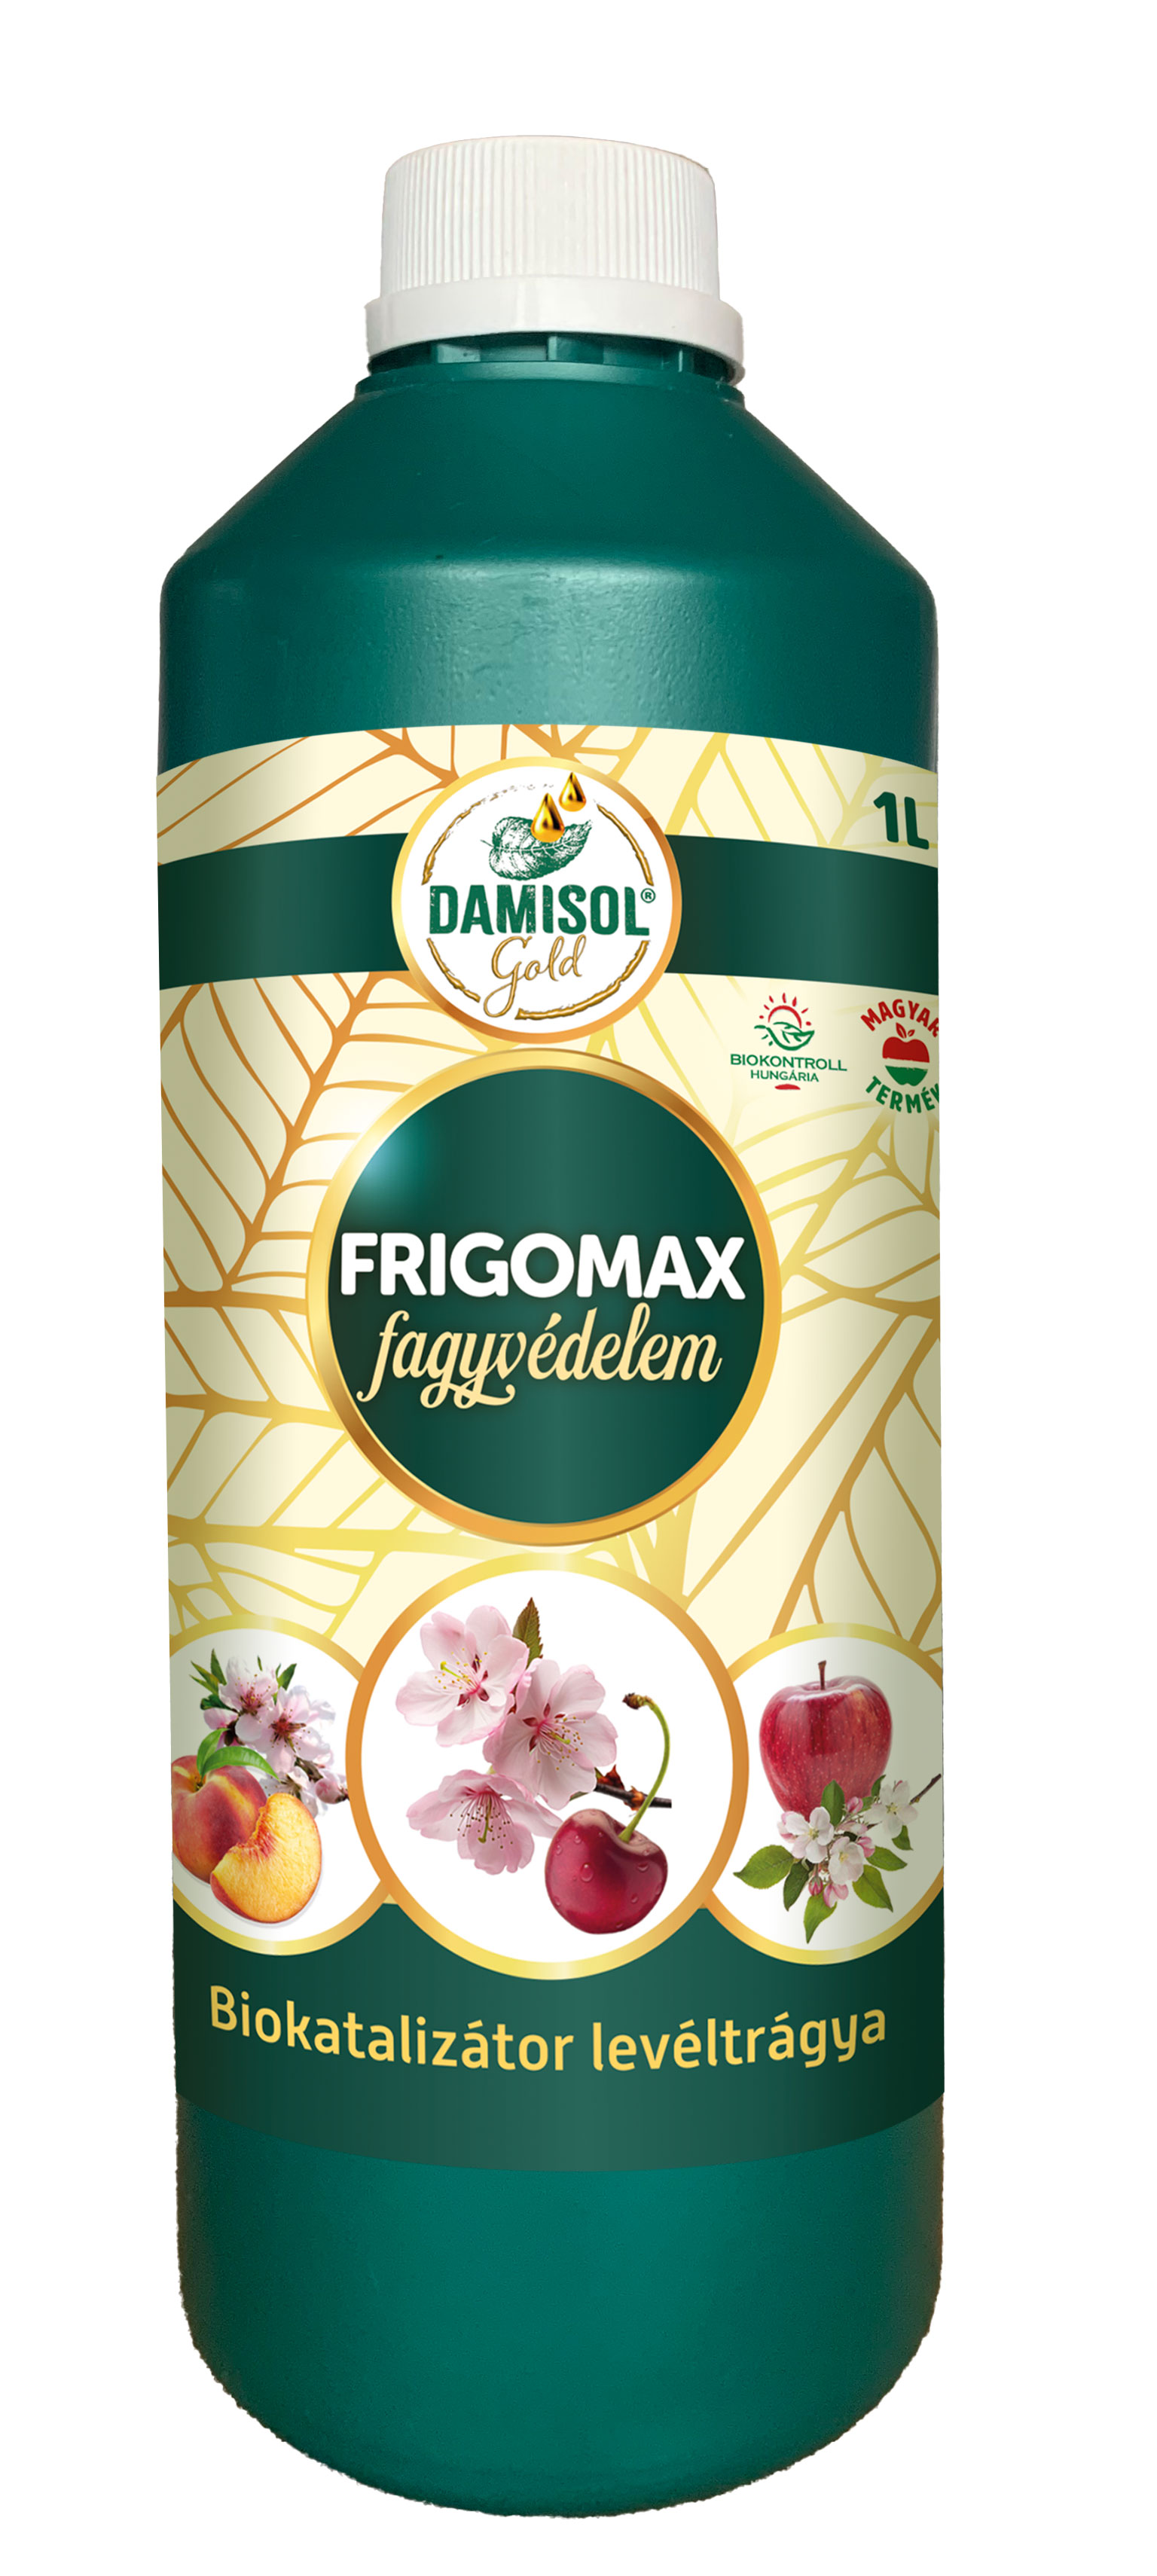 Damisol Gold Frigomax (fagyvédelem) 1 l